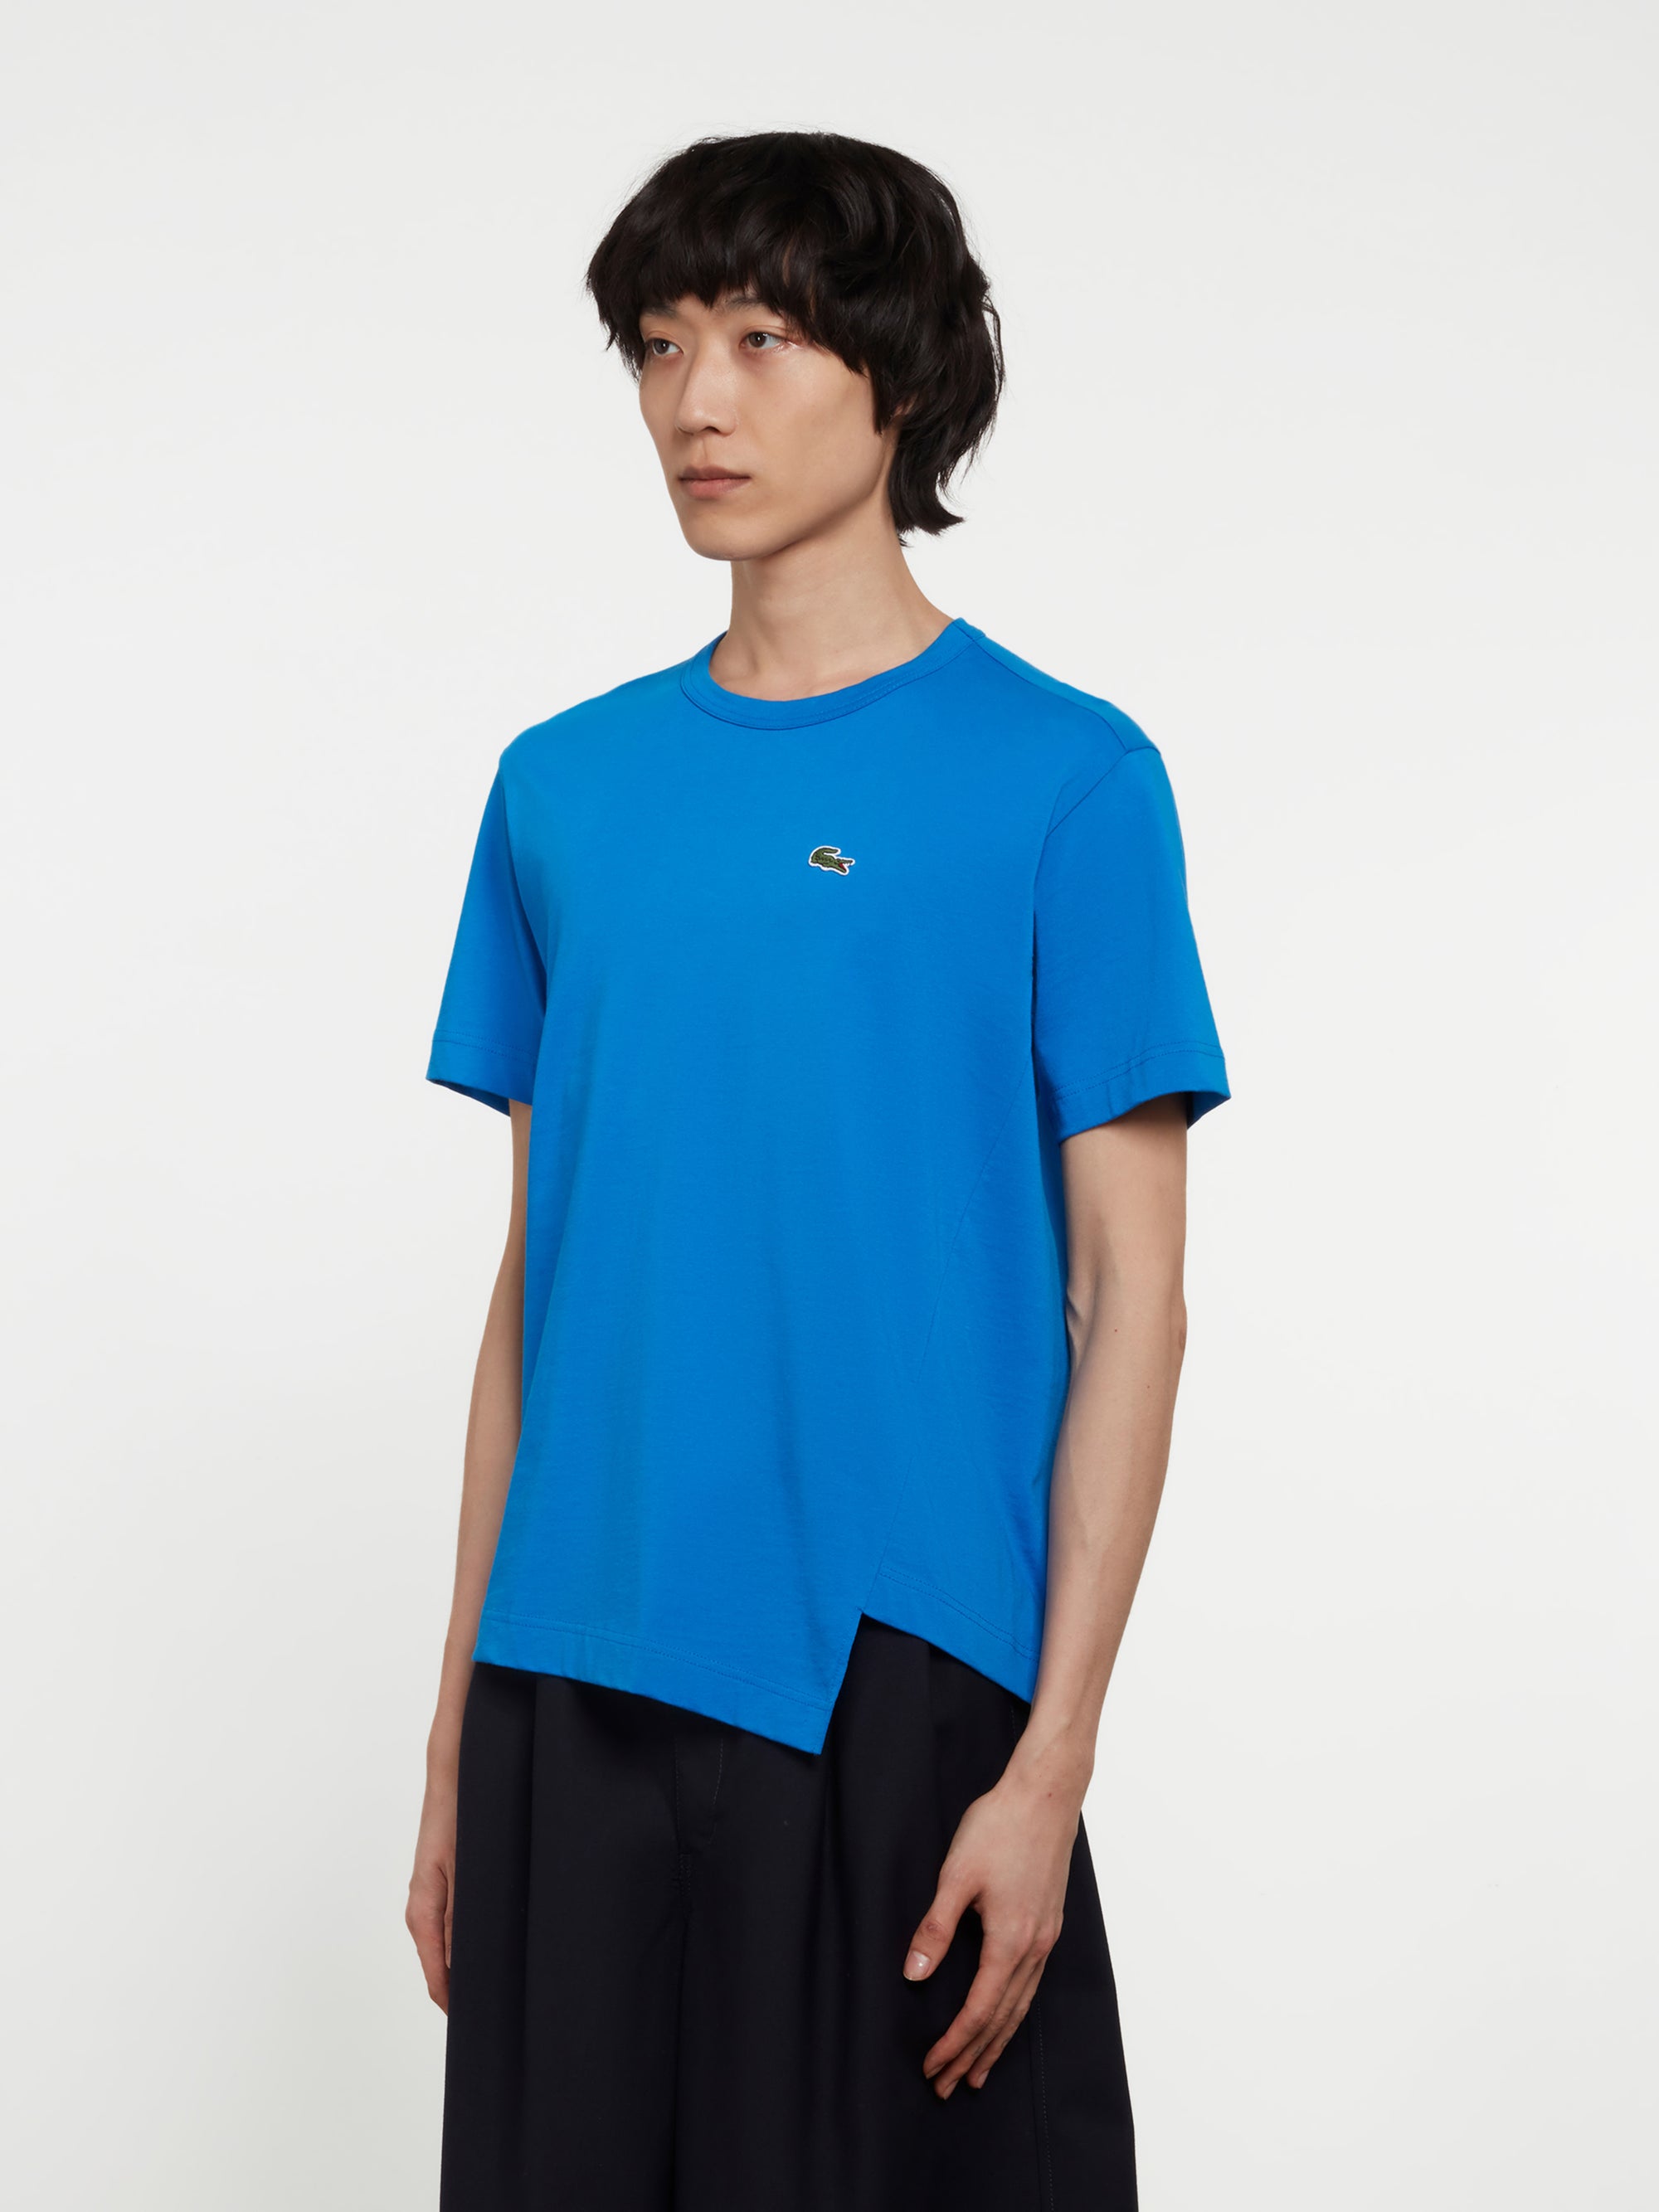 CDG Shirt - Lacoste Men's T-Shirt - (Blue) view 2